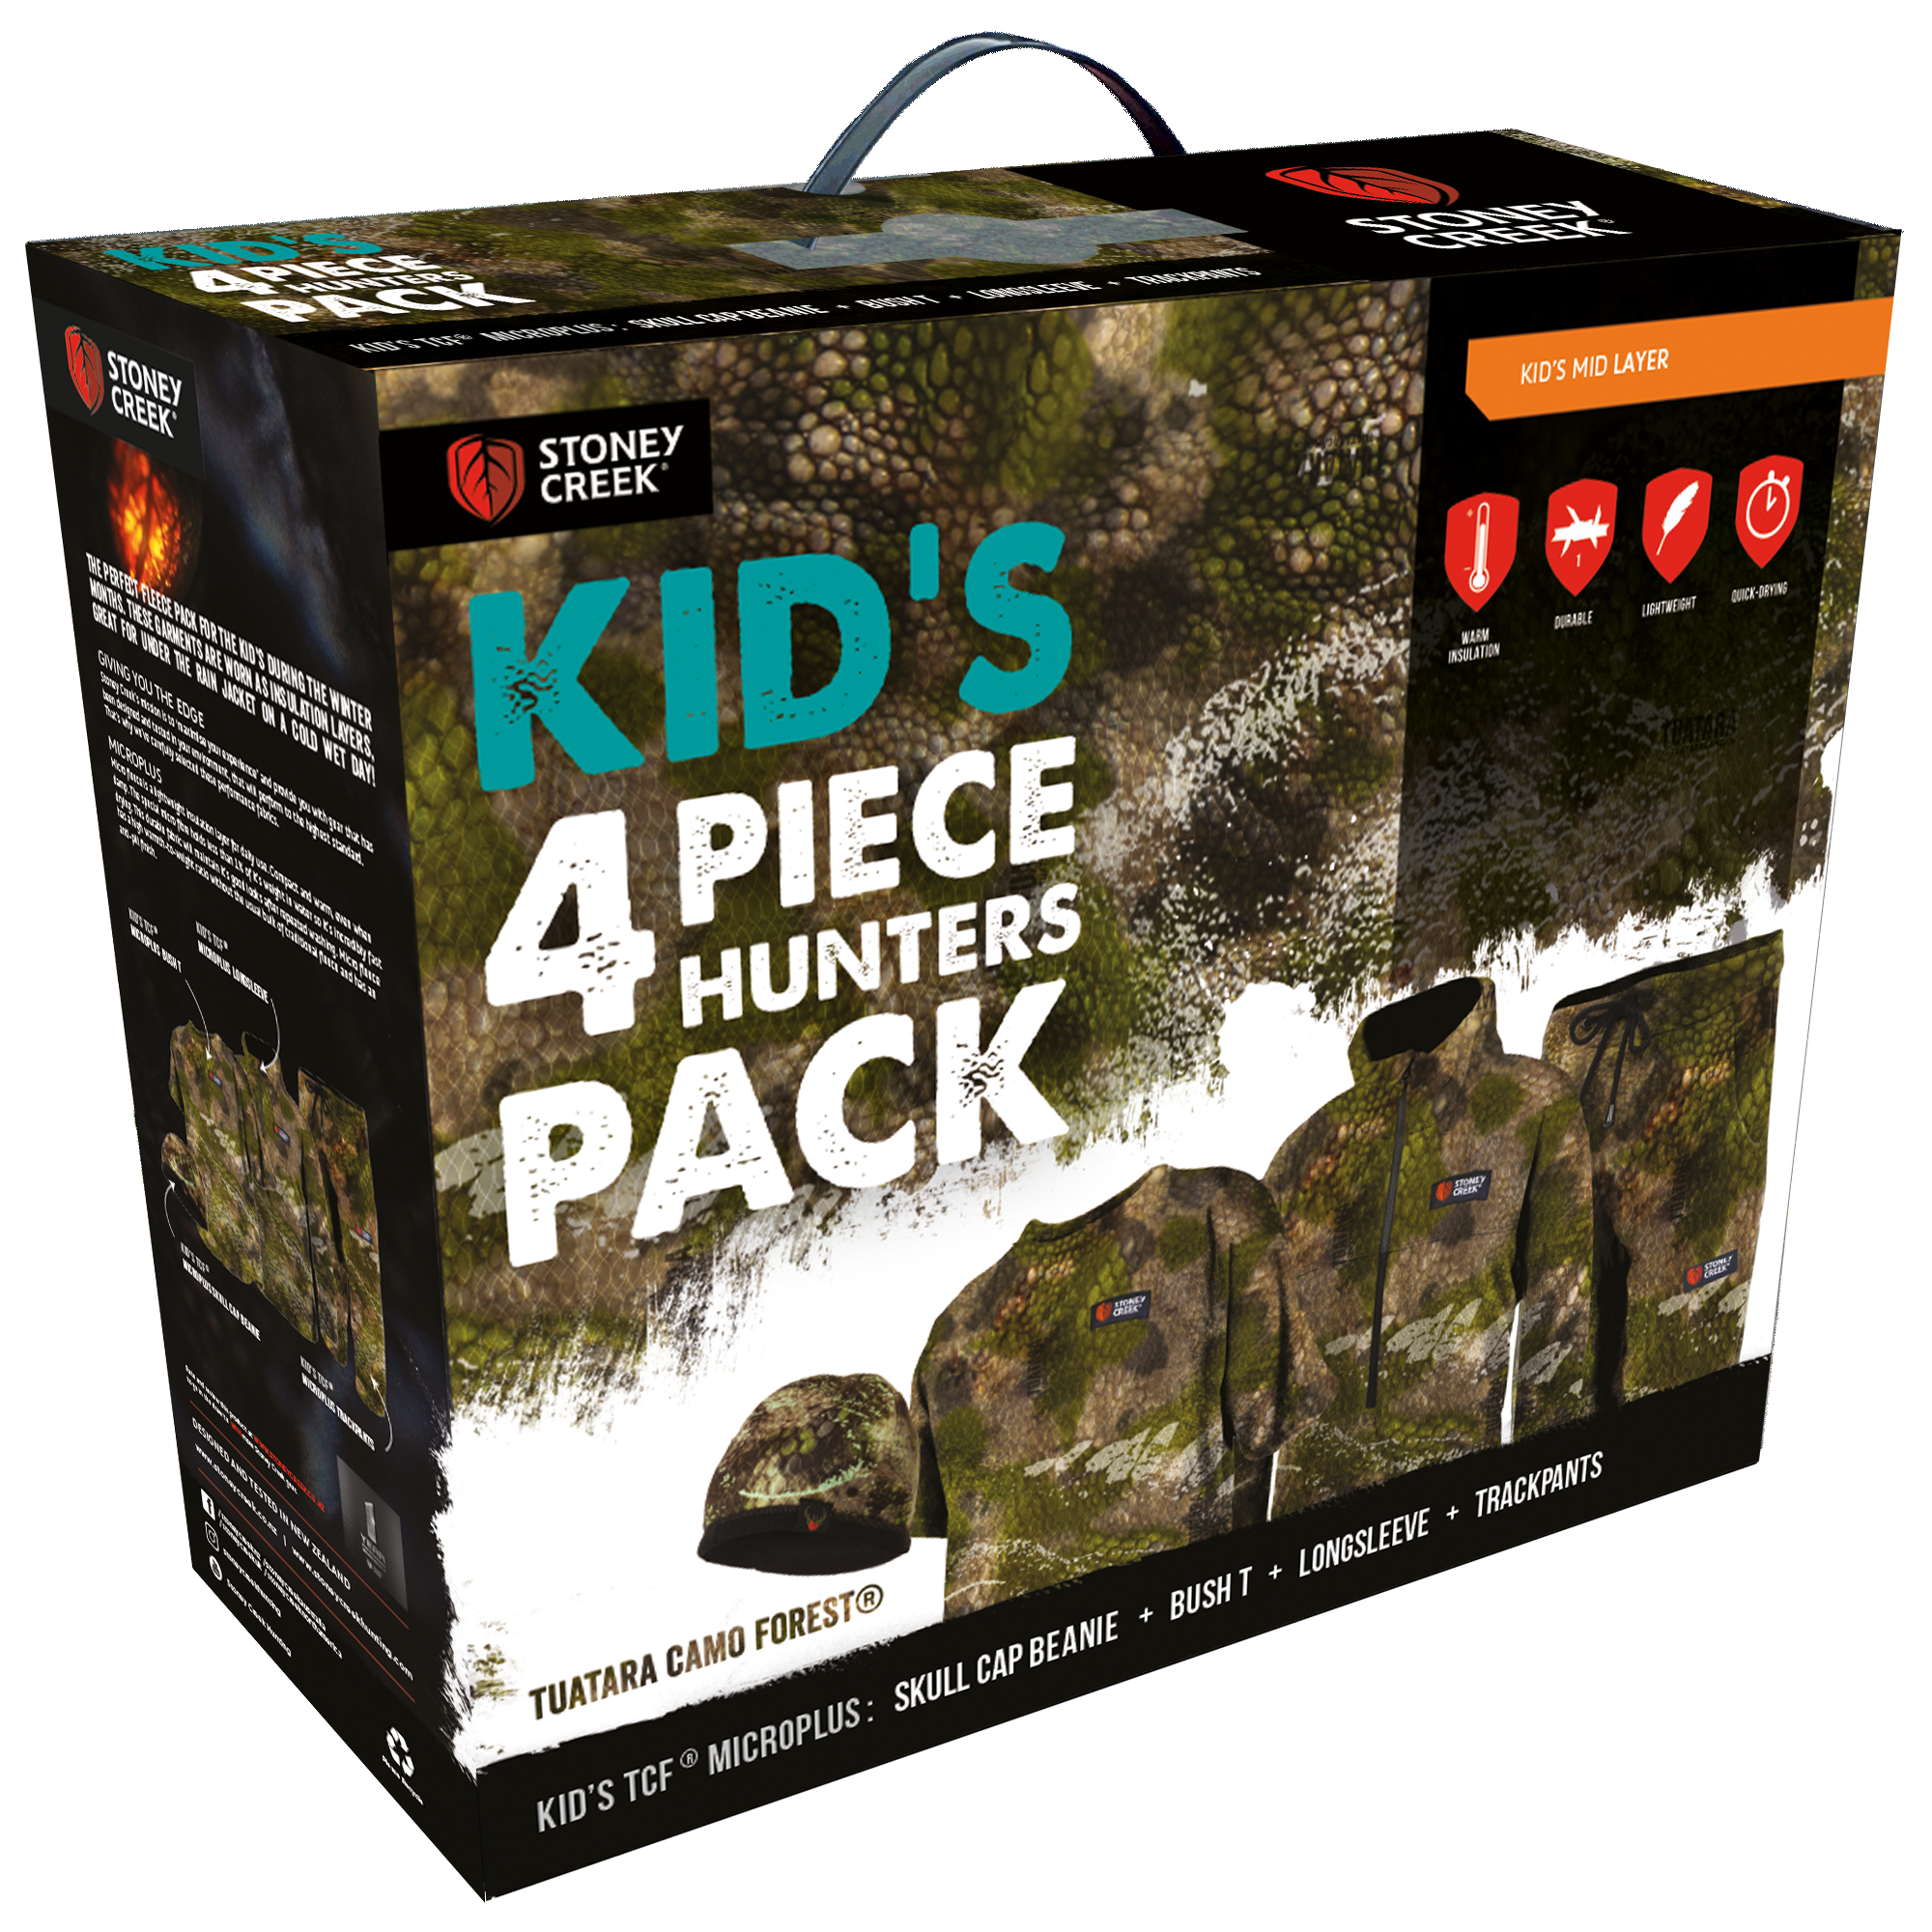 Kids 4 Piece Hunters Pack